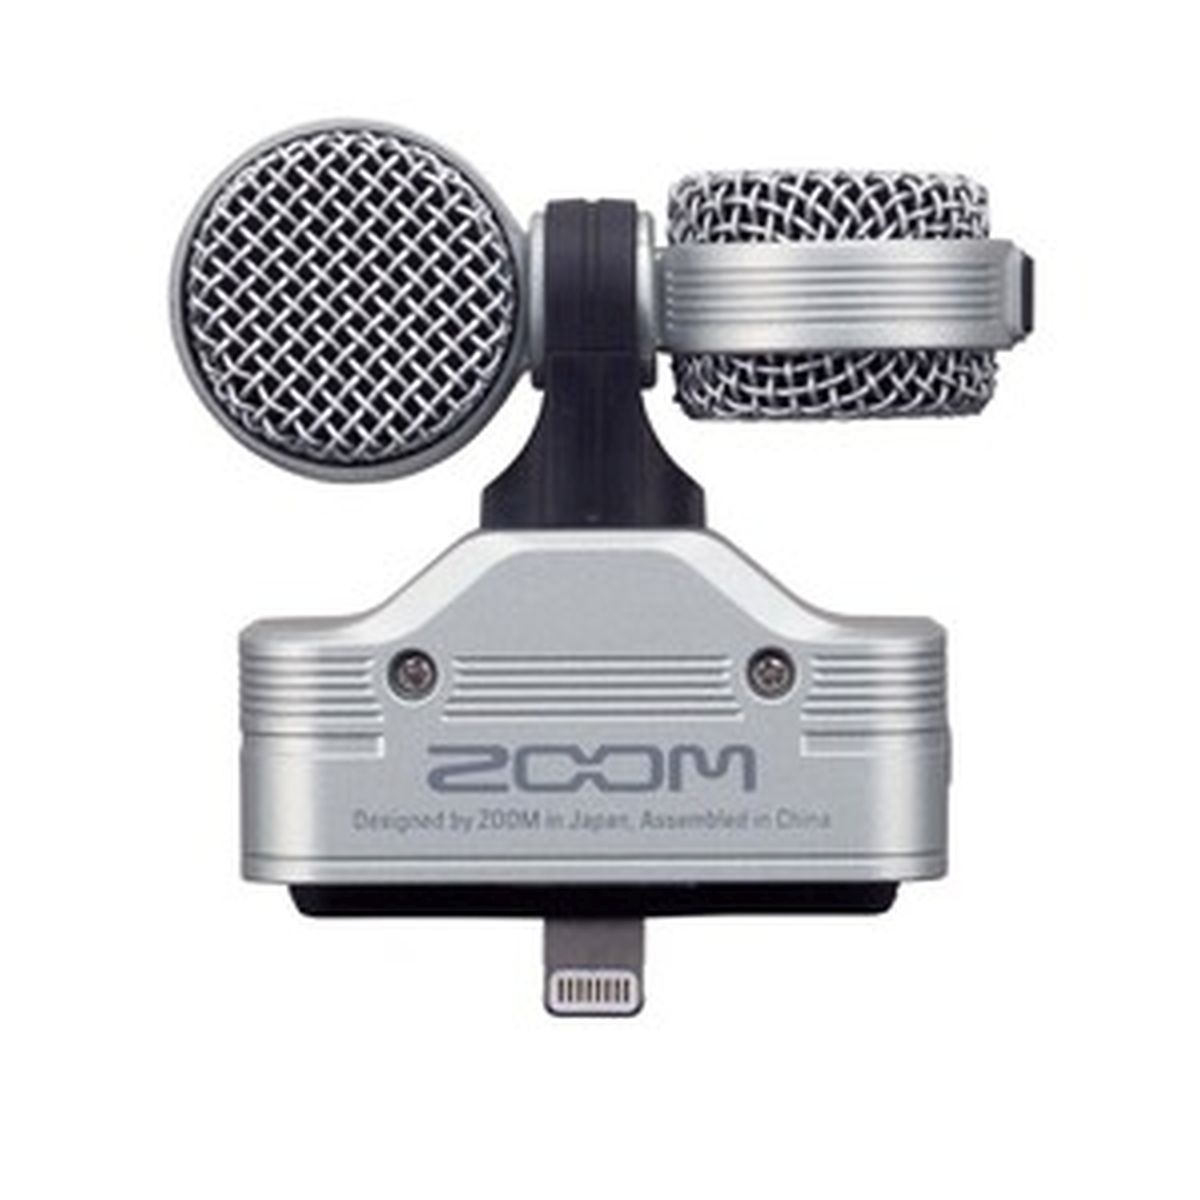 Zoom iQ7 MS Stereo Mikrofon für iPhone, iPad und iPod Touch